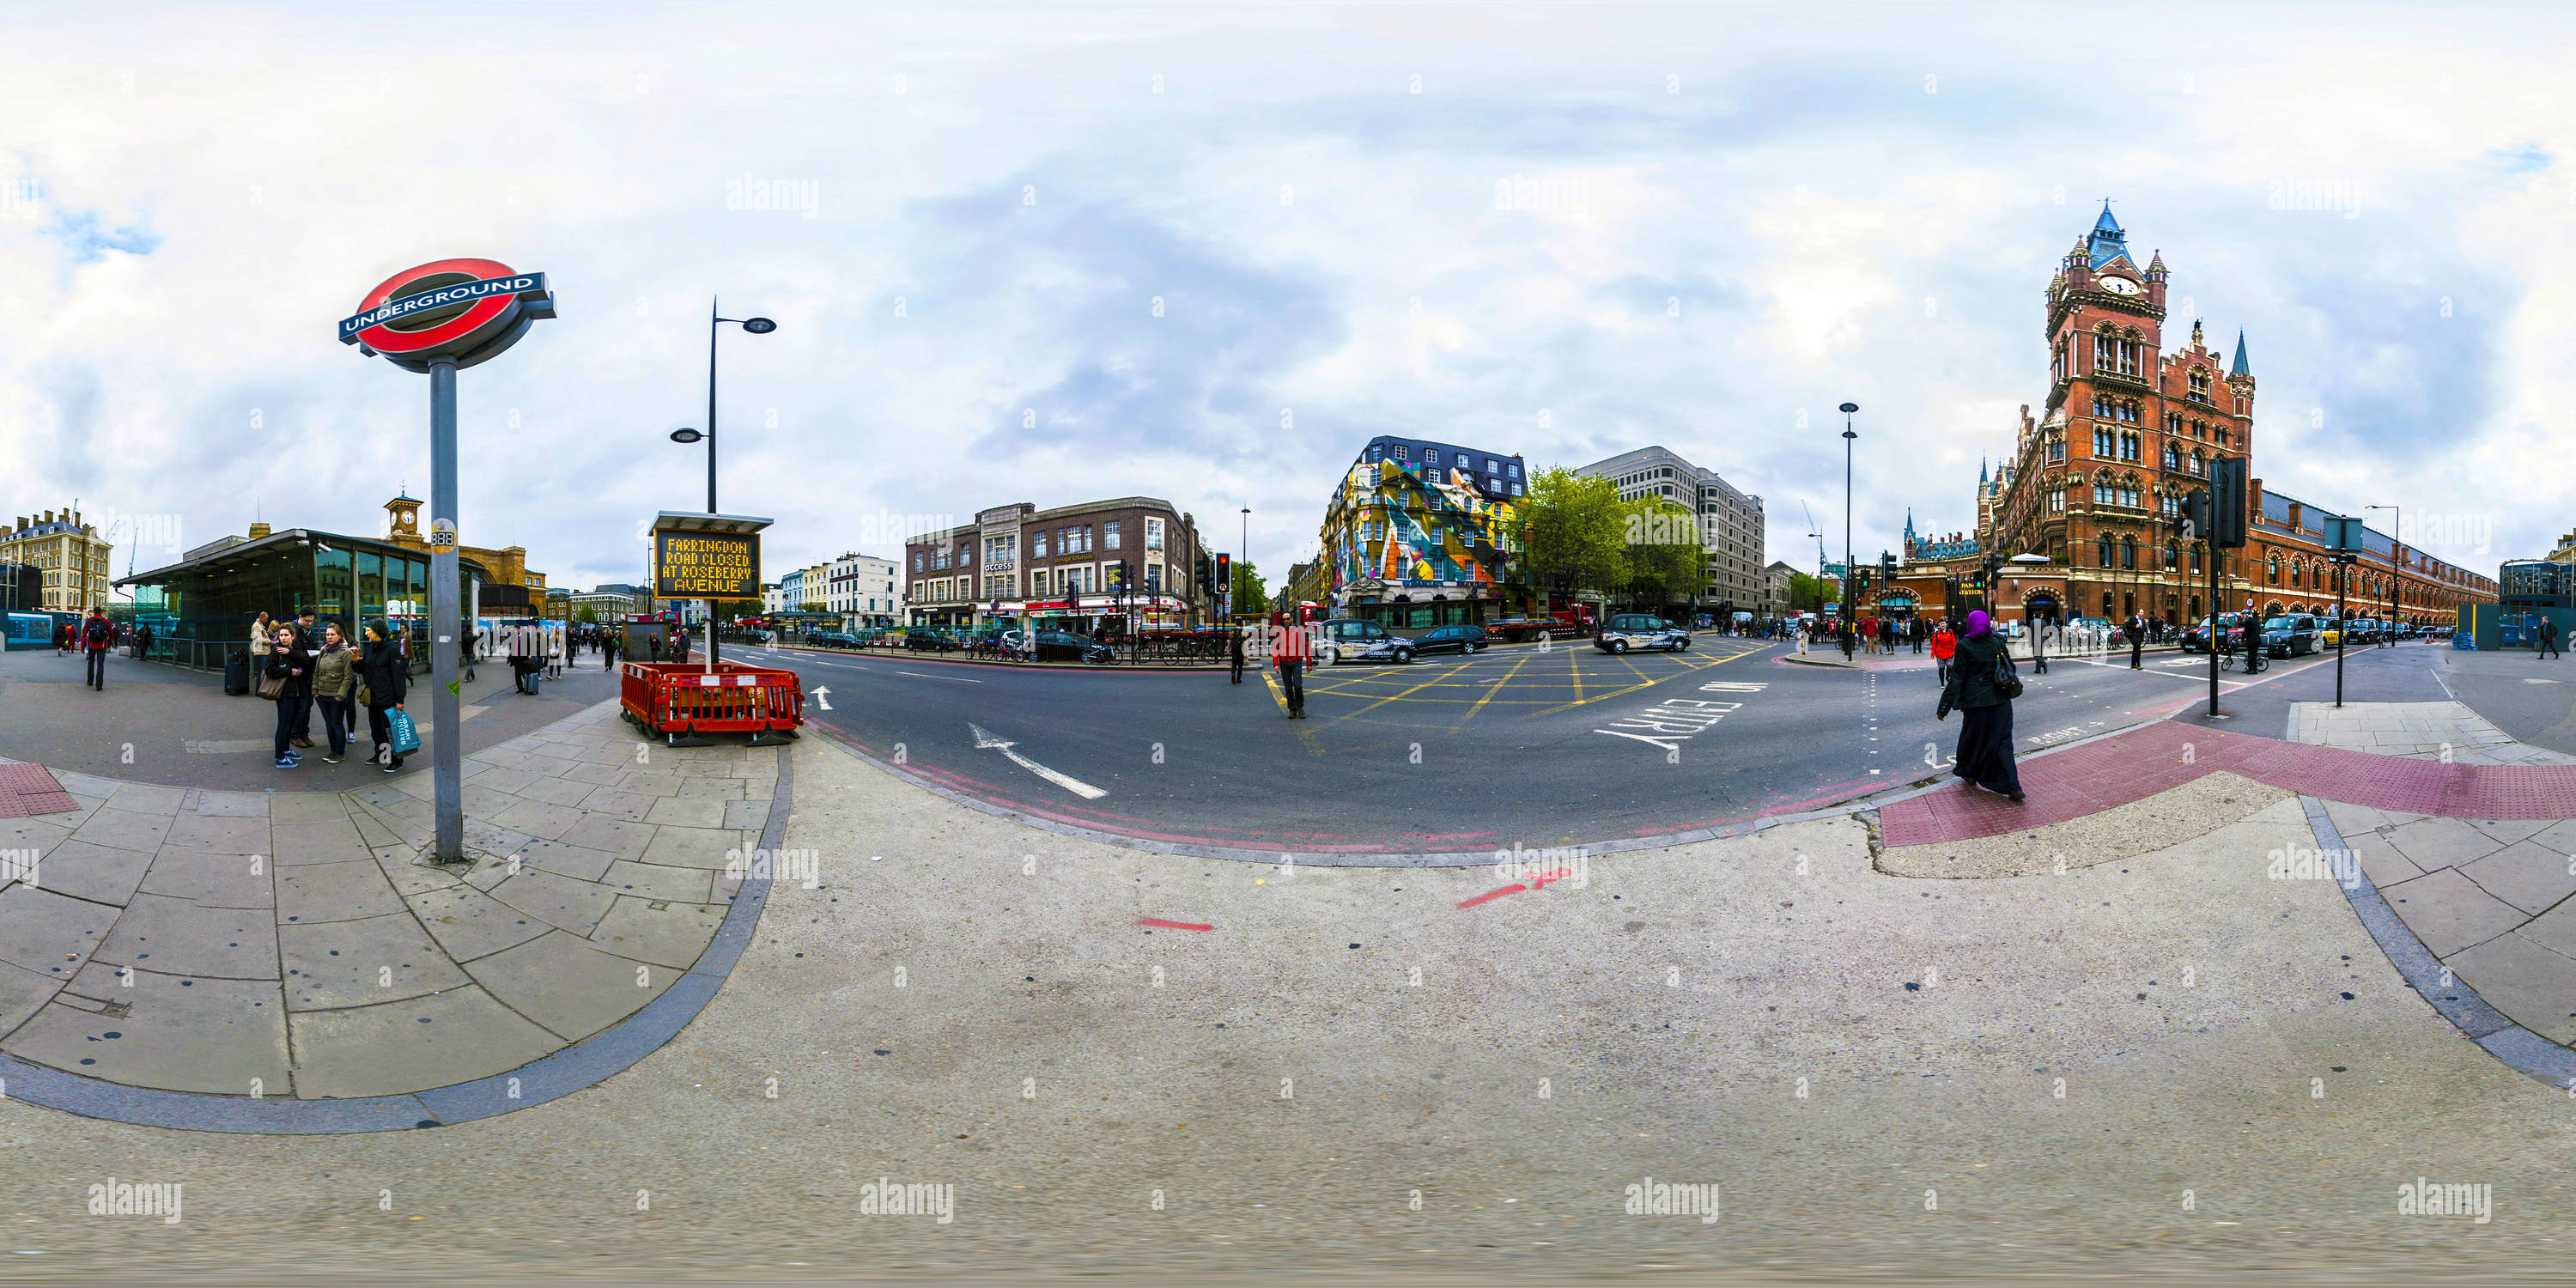 360 degree panoramic view of Kings Cross Saint Pancras Railway Stations